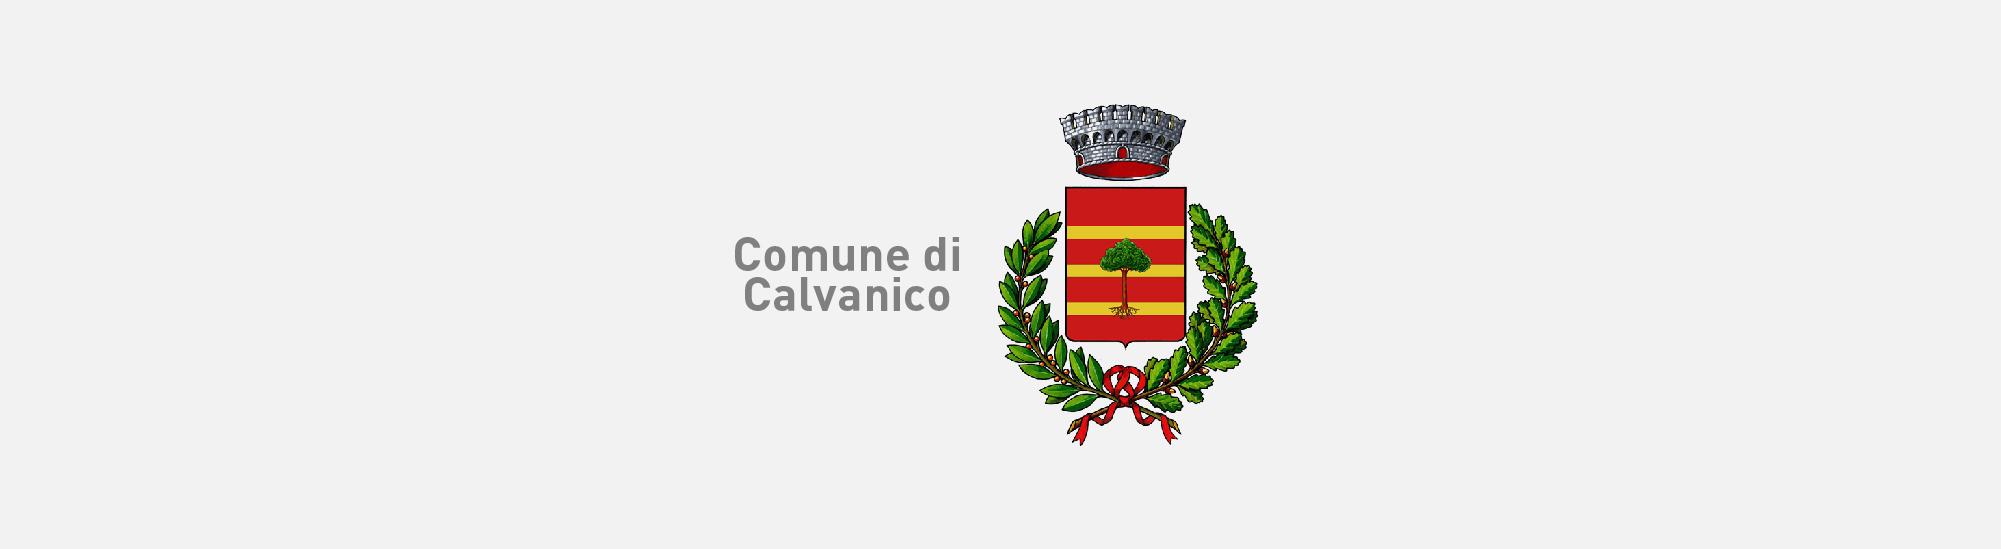 Header Comune Calvanico